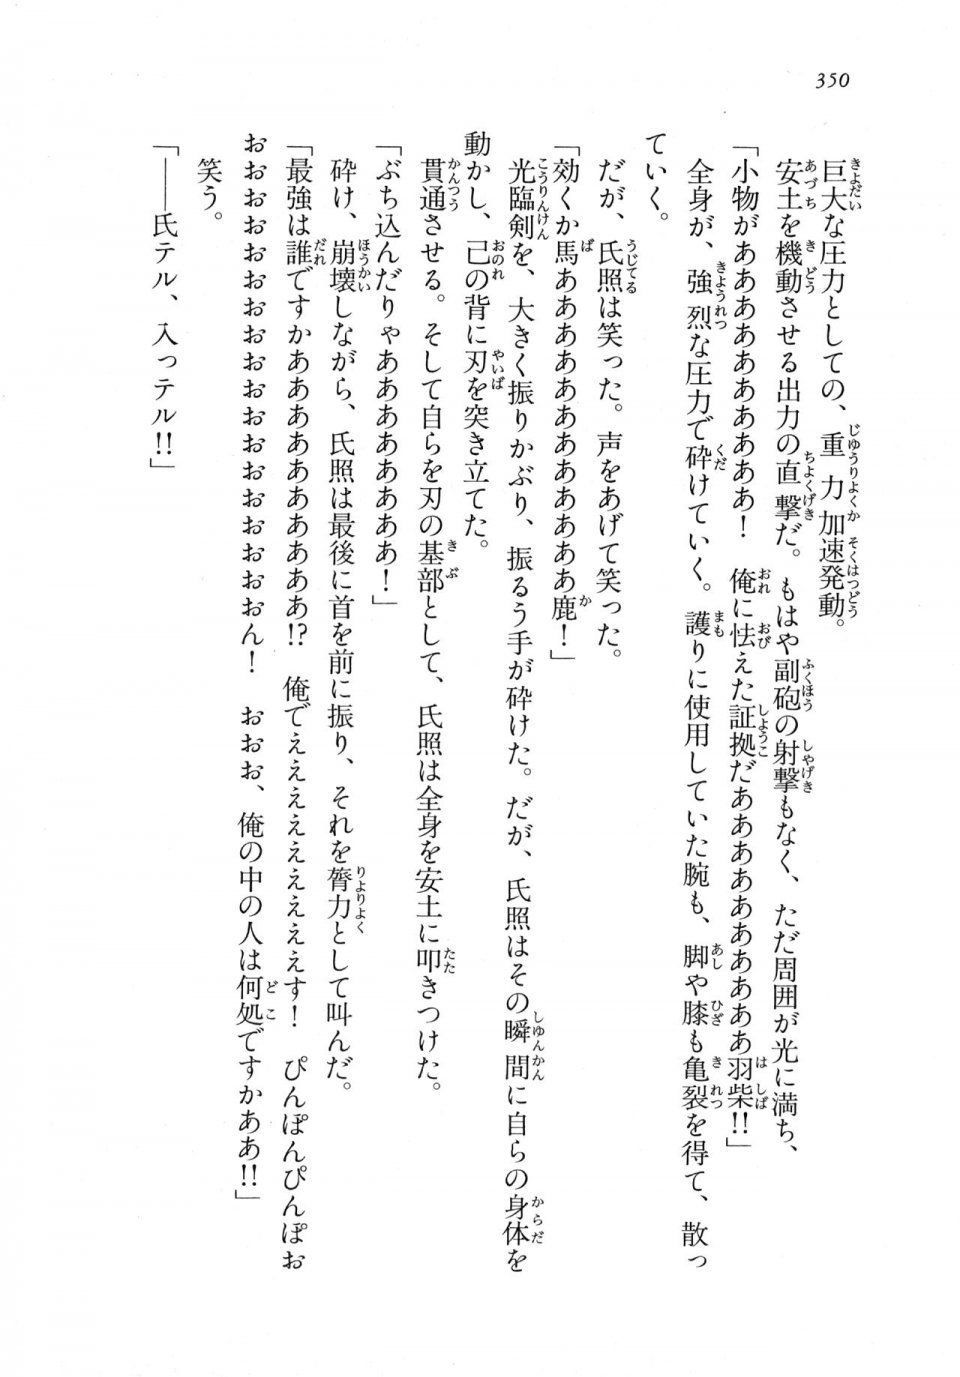 Kyoukai Senjou no Horizon LN Vol 18(7C) Part 1 - Photo #350